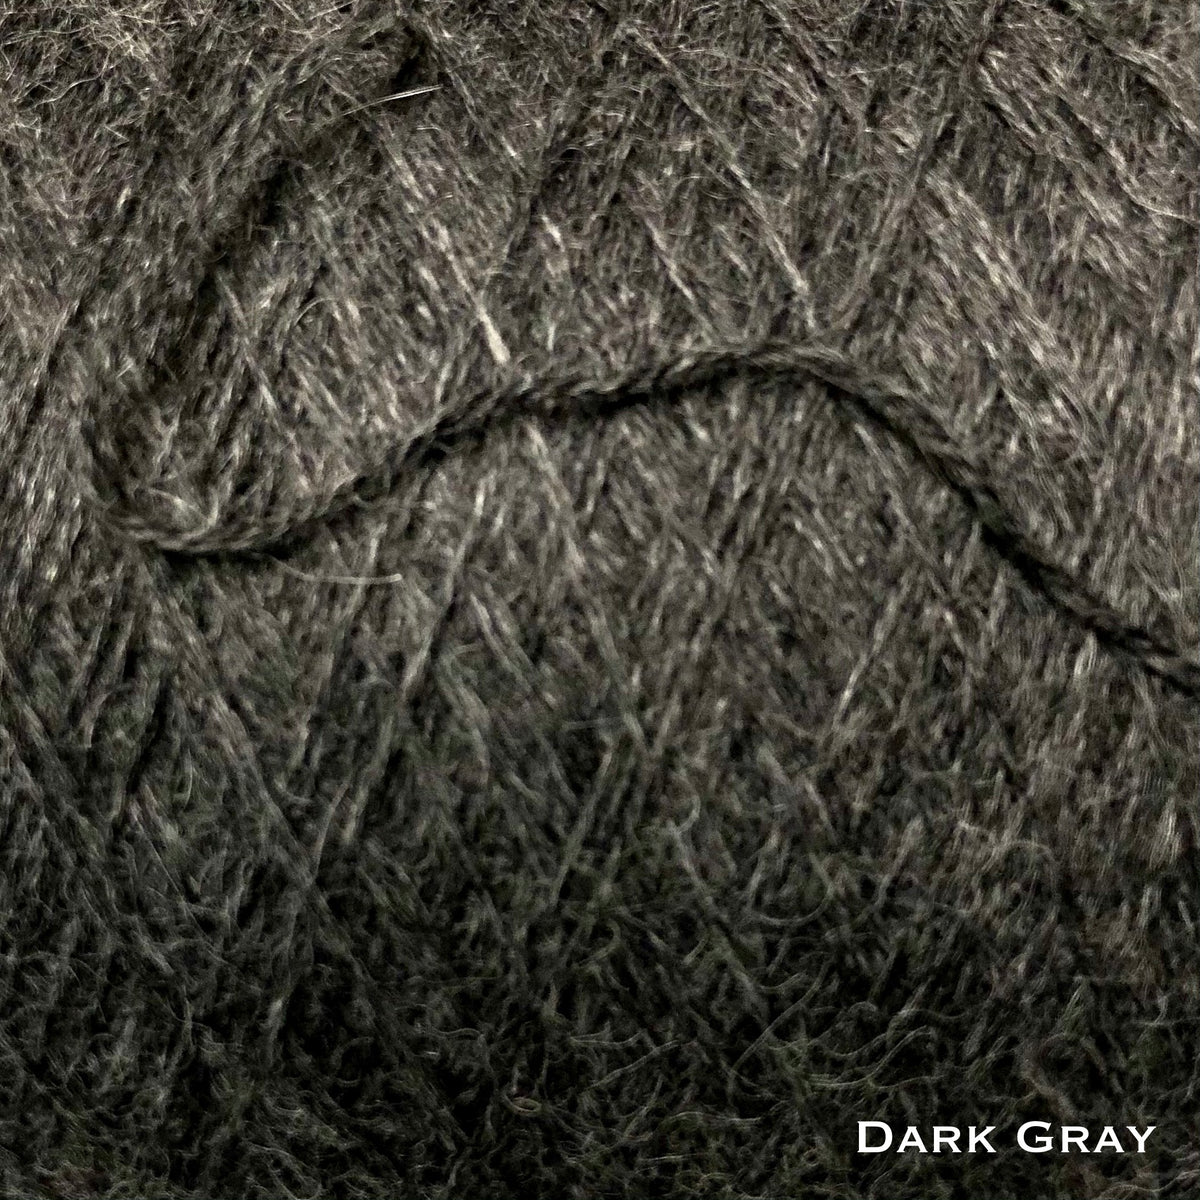 dark gray sport weight alpaca wool yarn for knitting and crochet